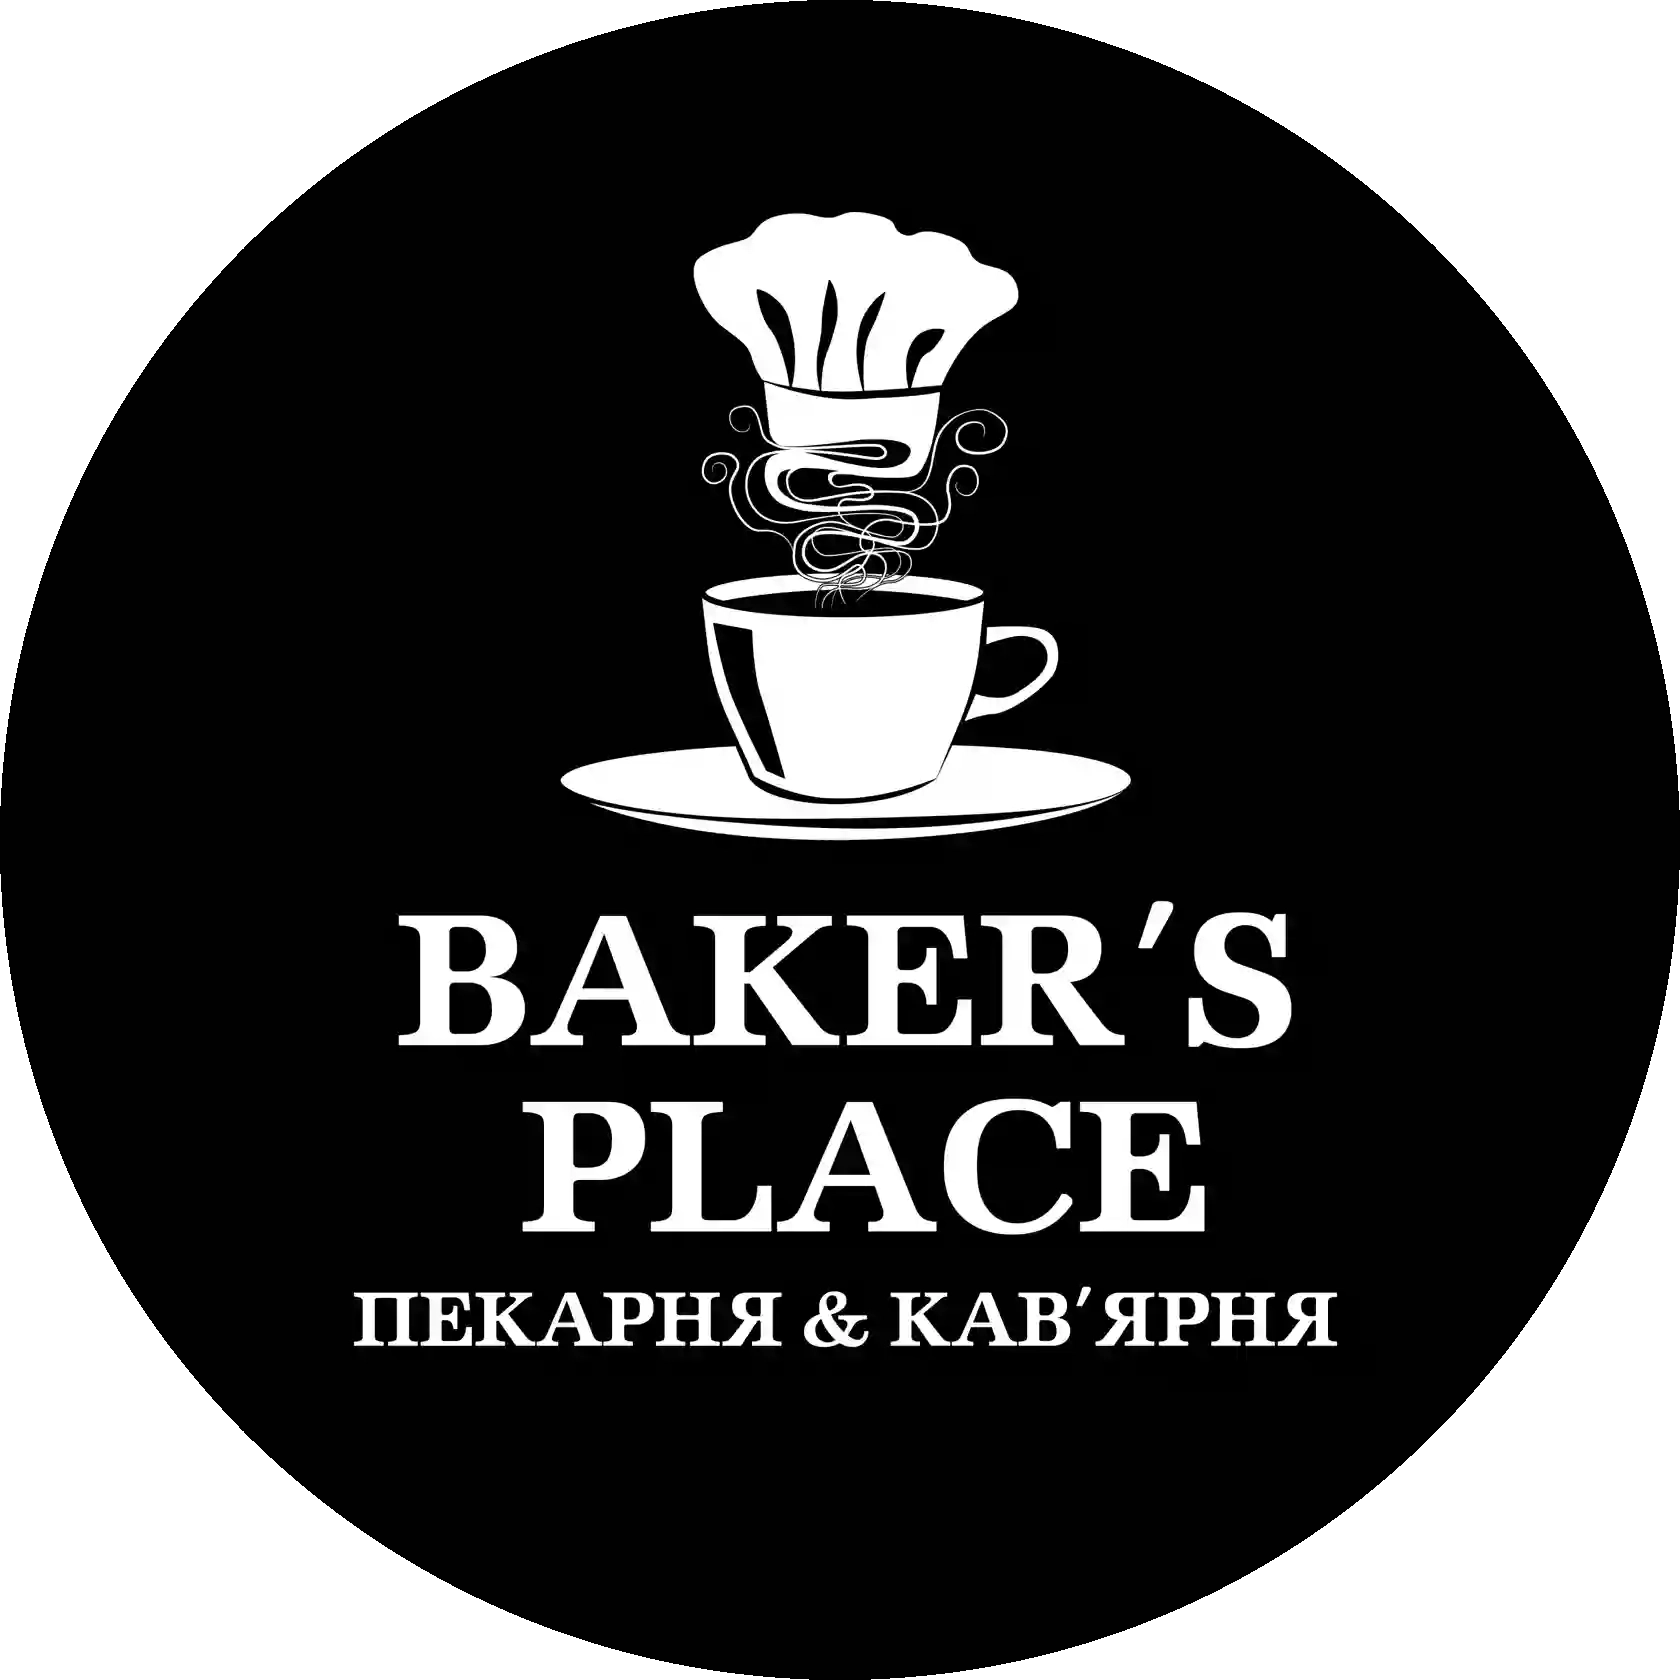 Baker’s Place